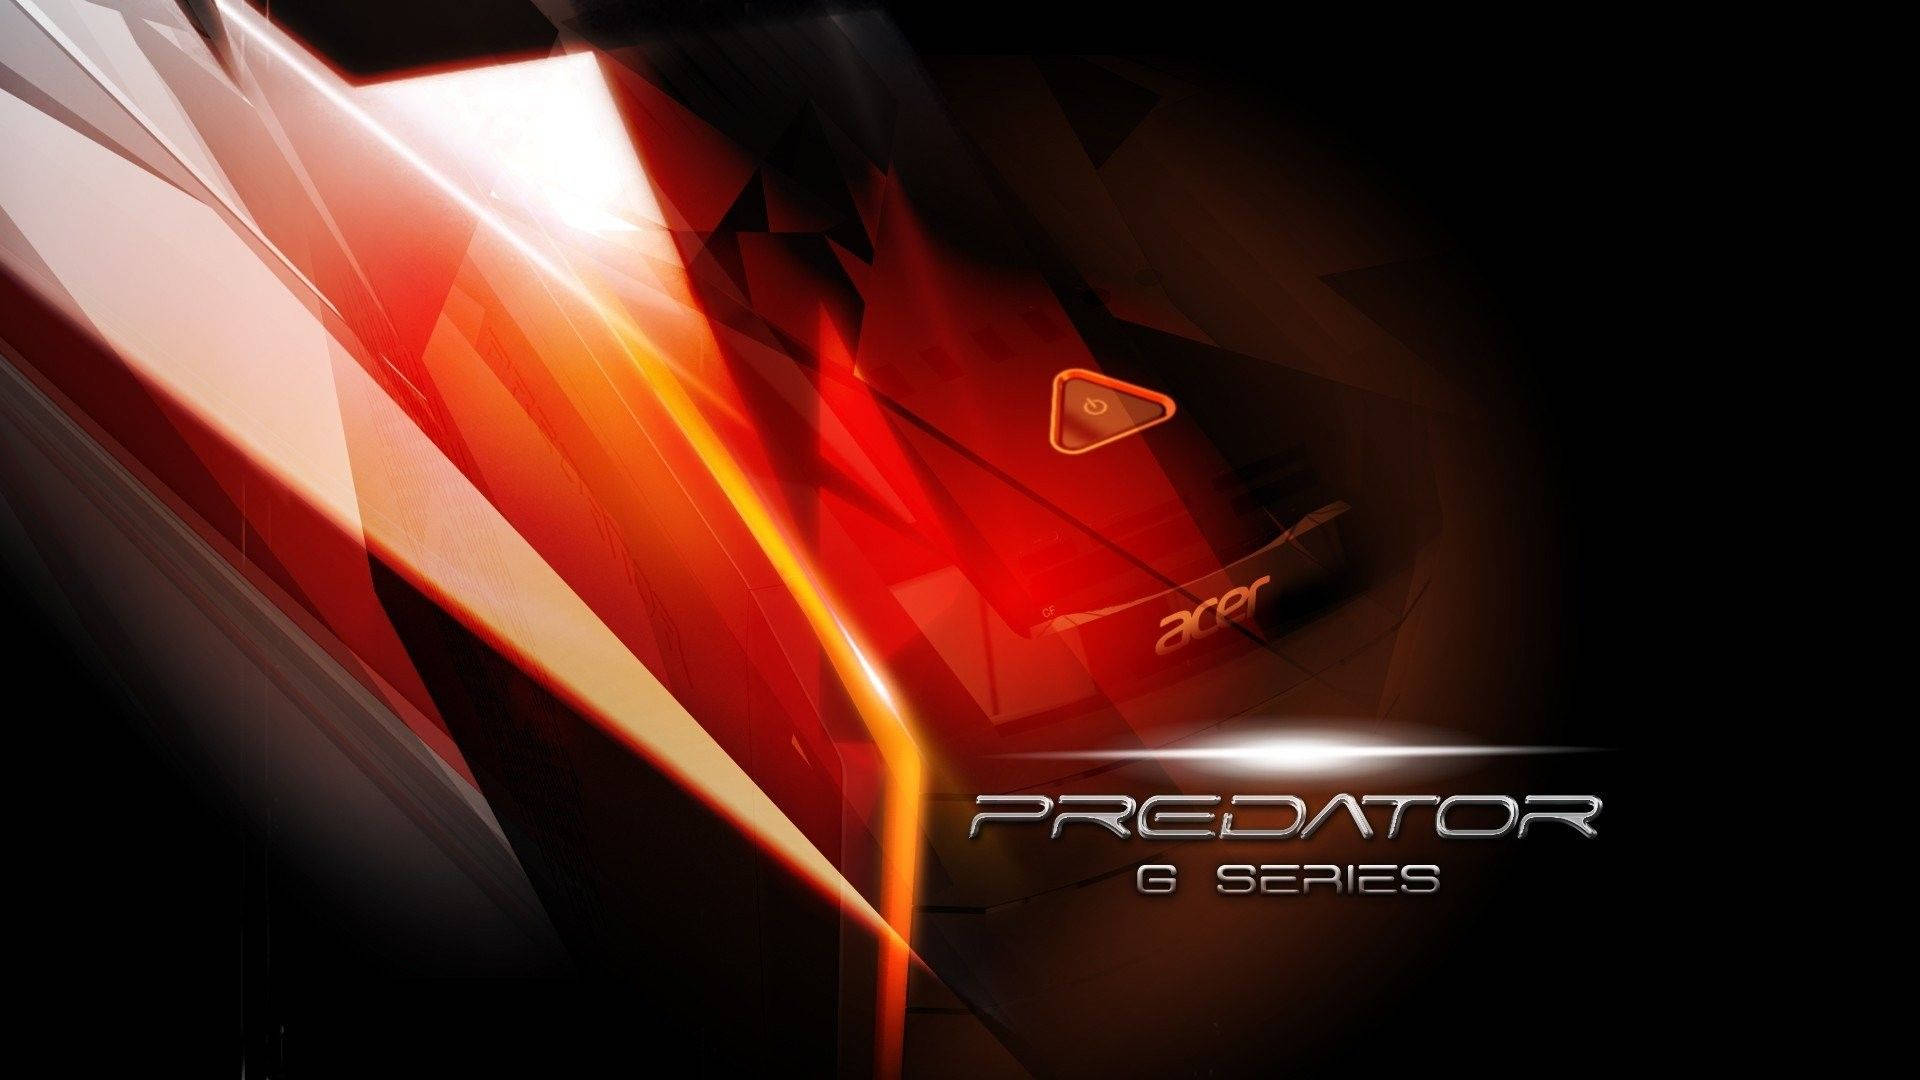 Red Acer Predator G Series Background